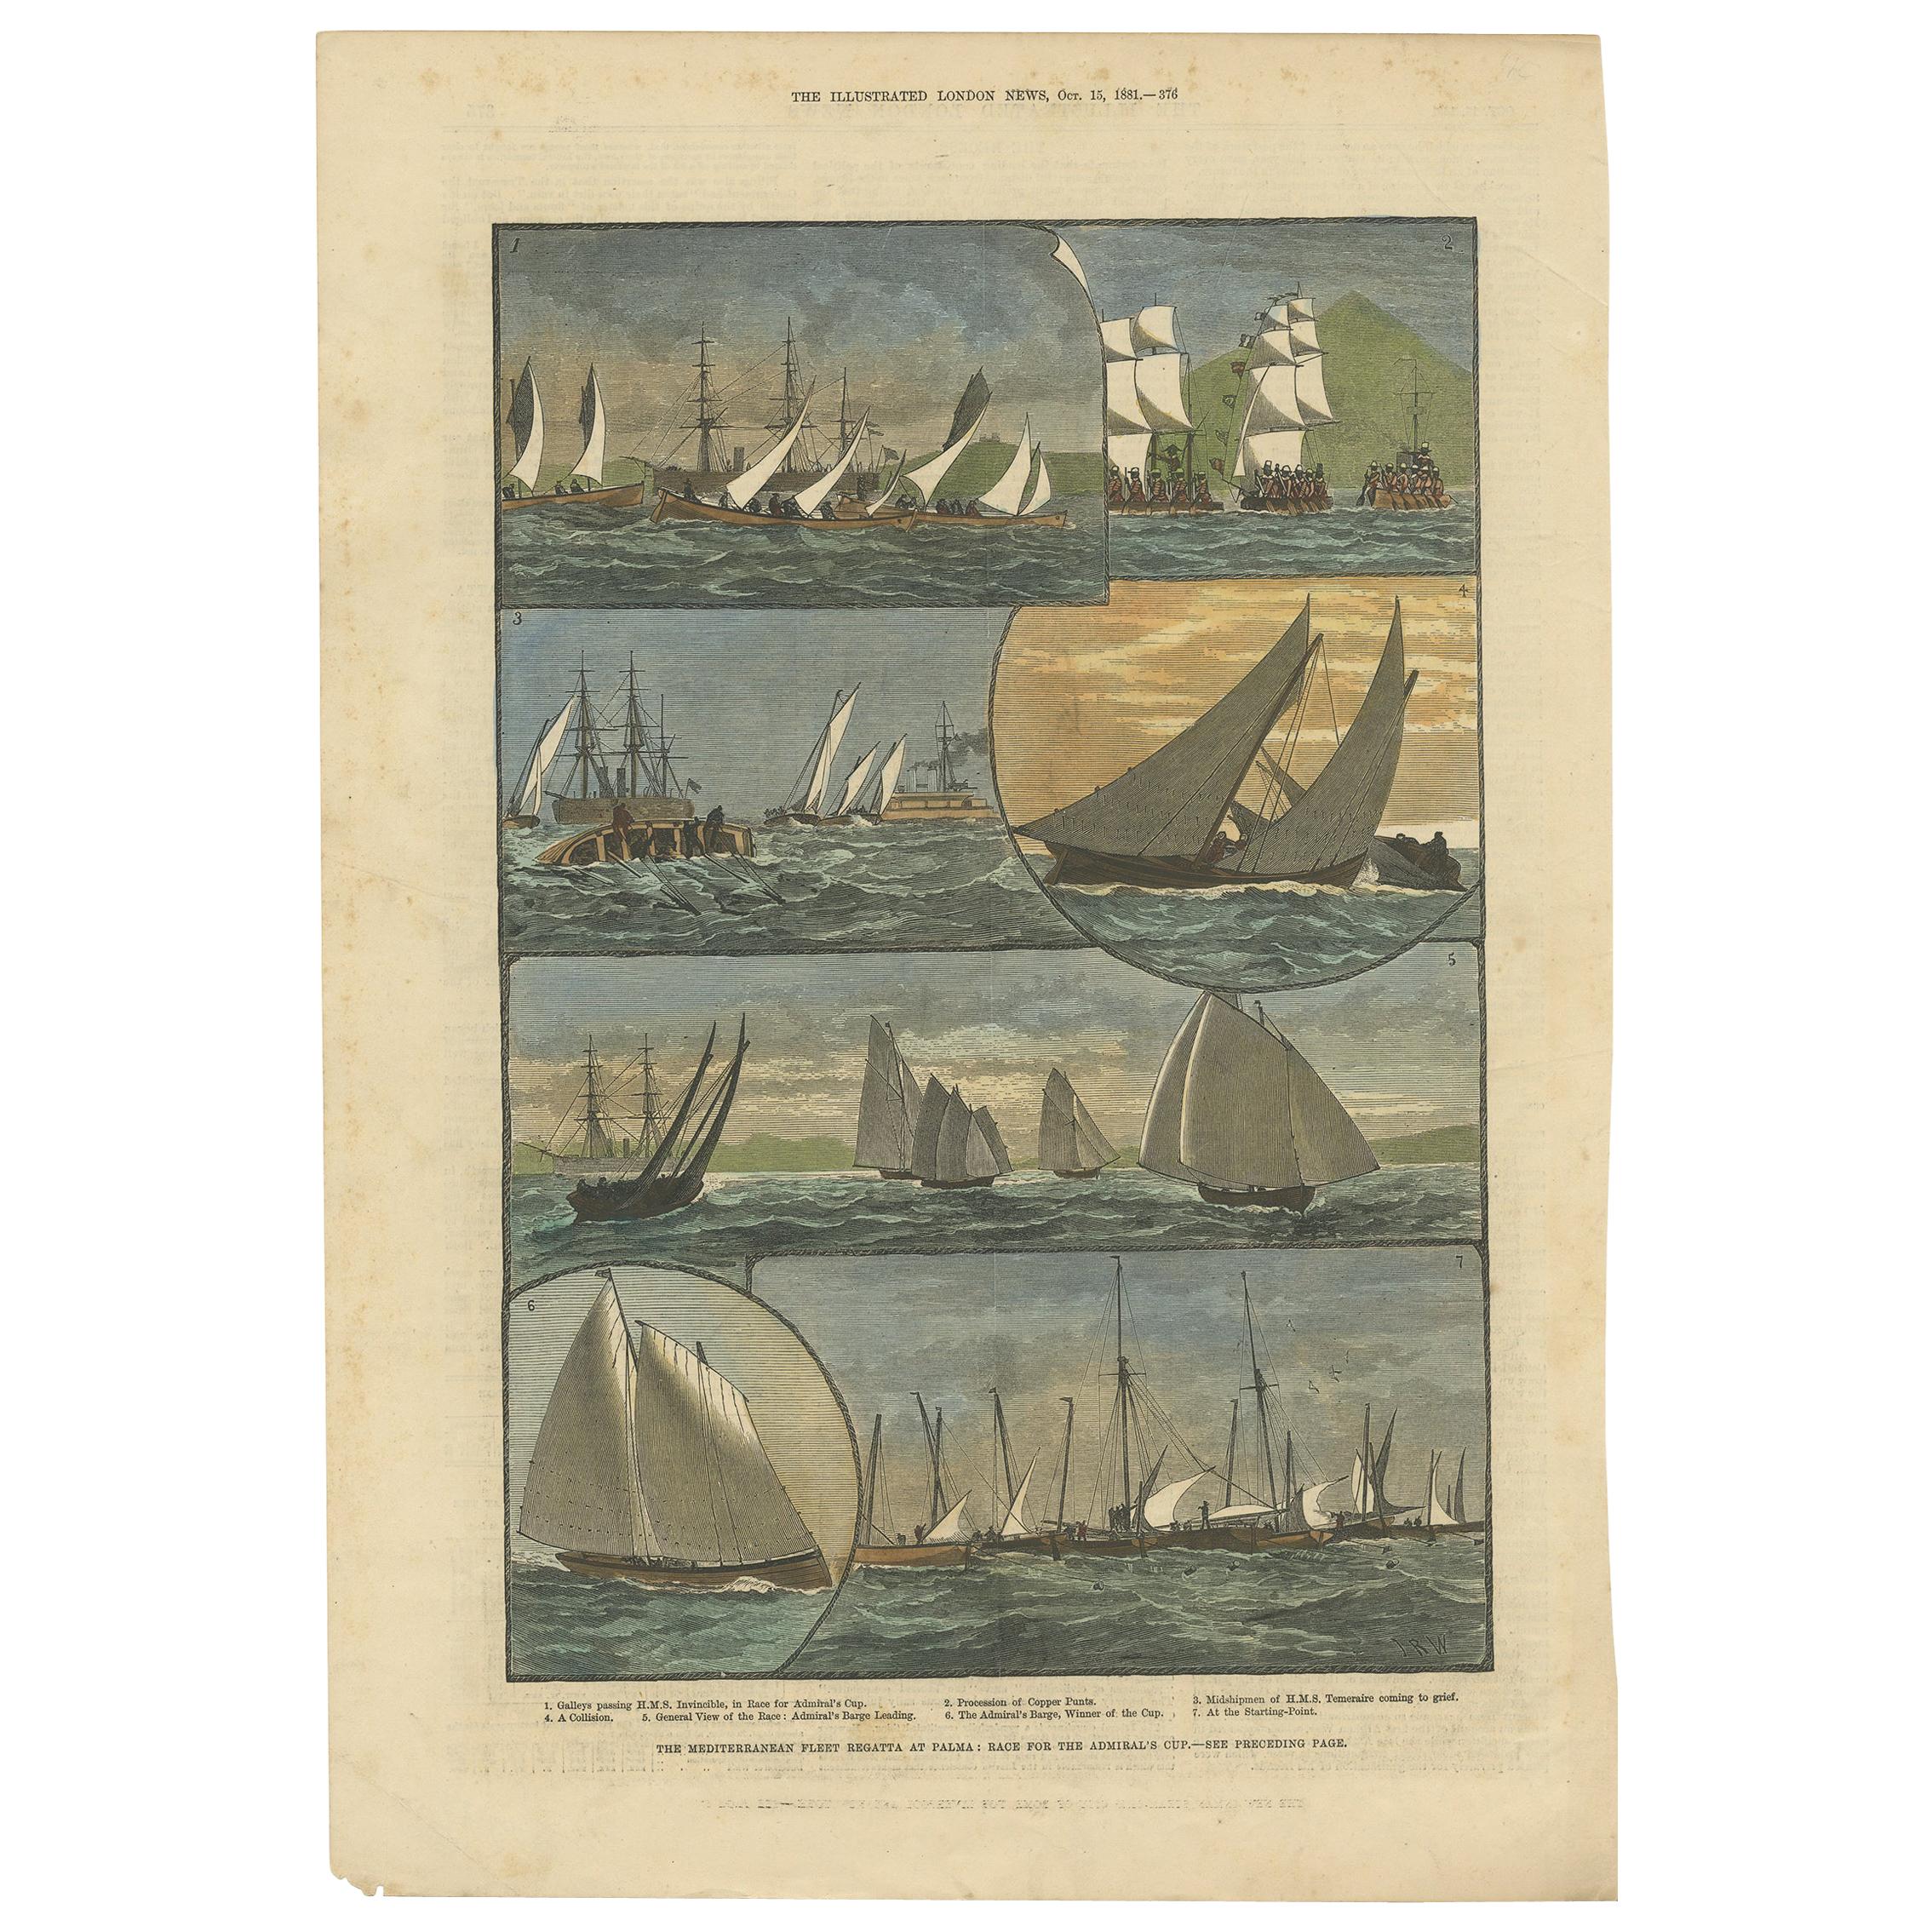 Antique Print of the Mediterranean Fleet Regatta at Palma, 1881, Colored